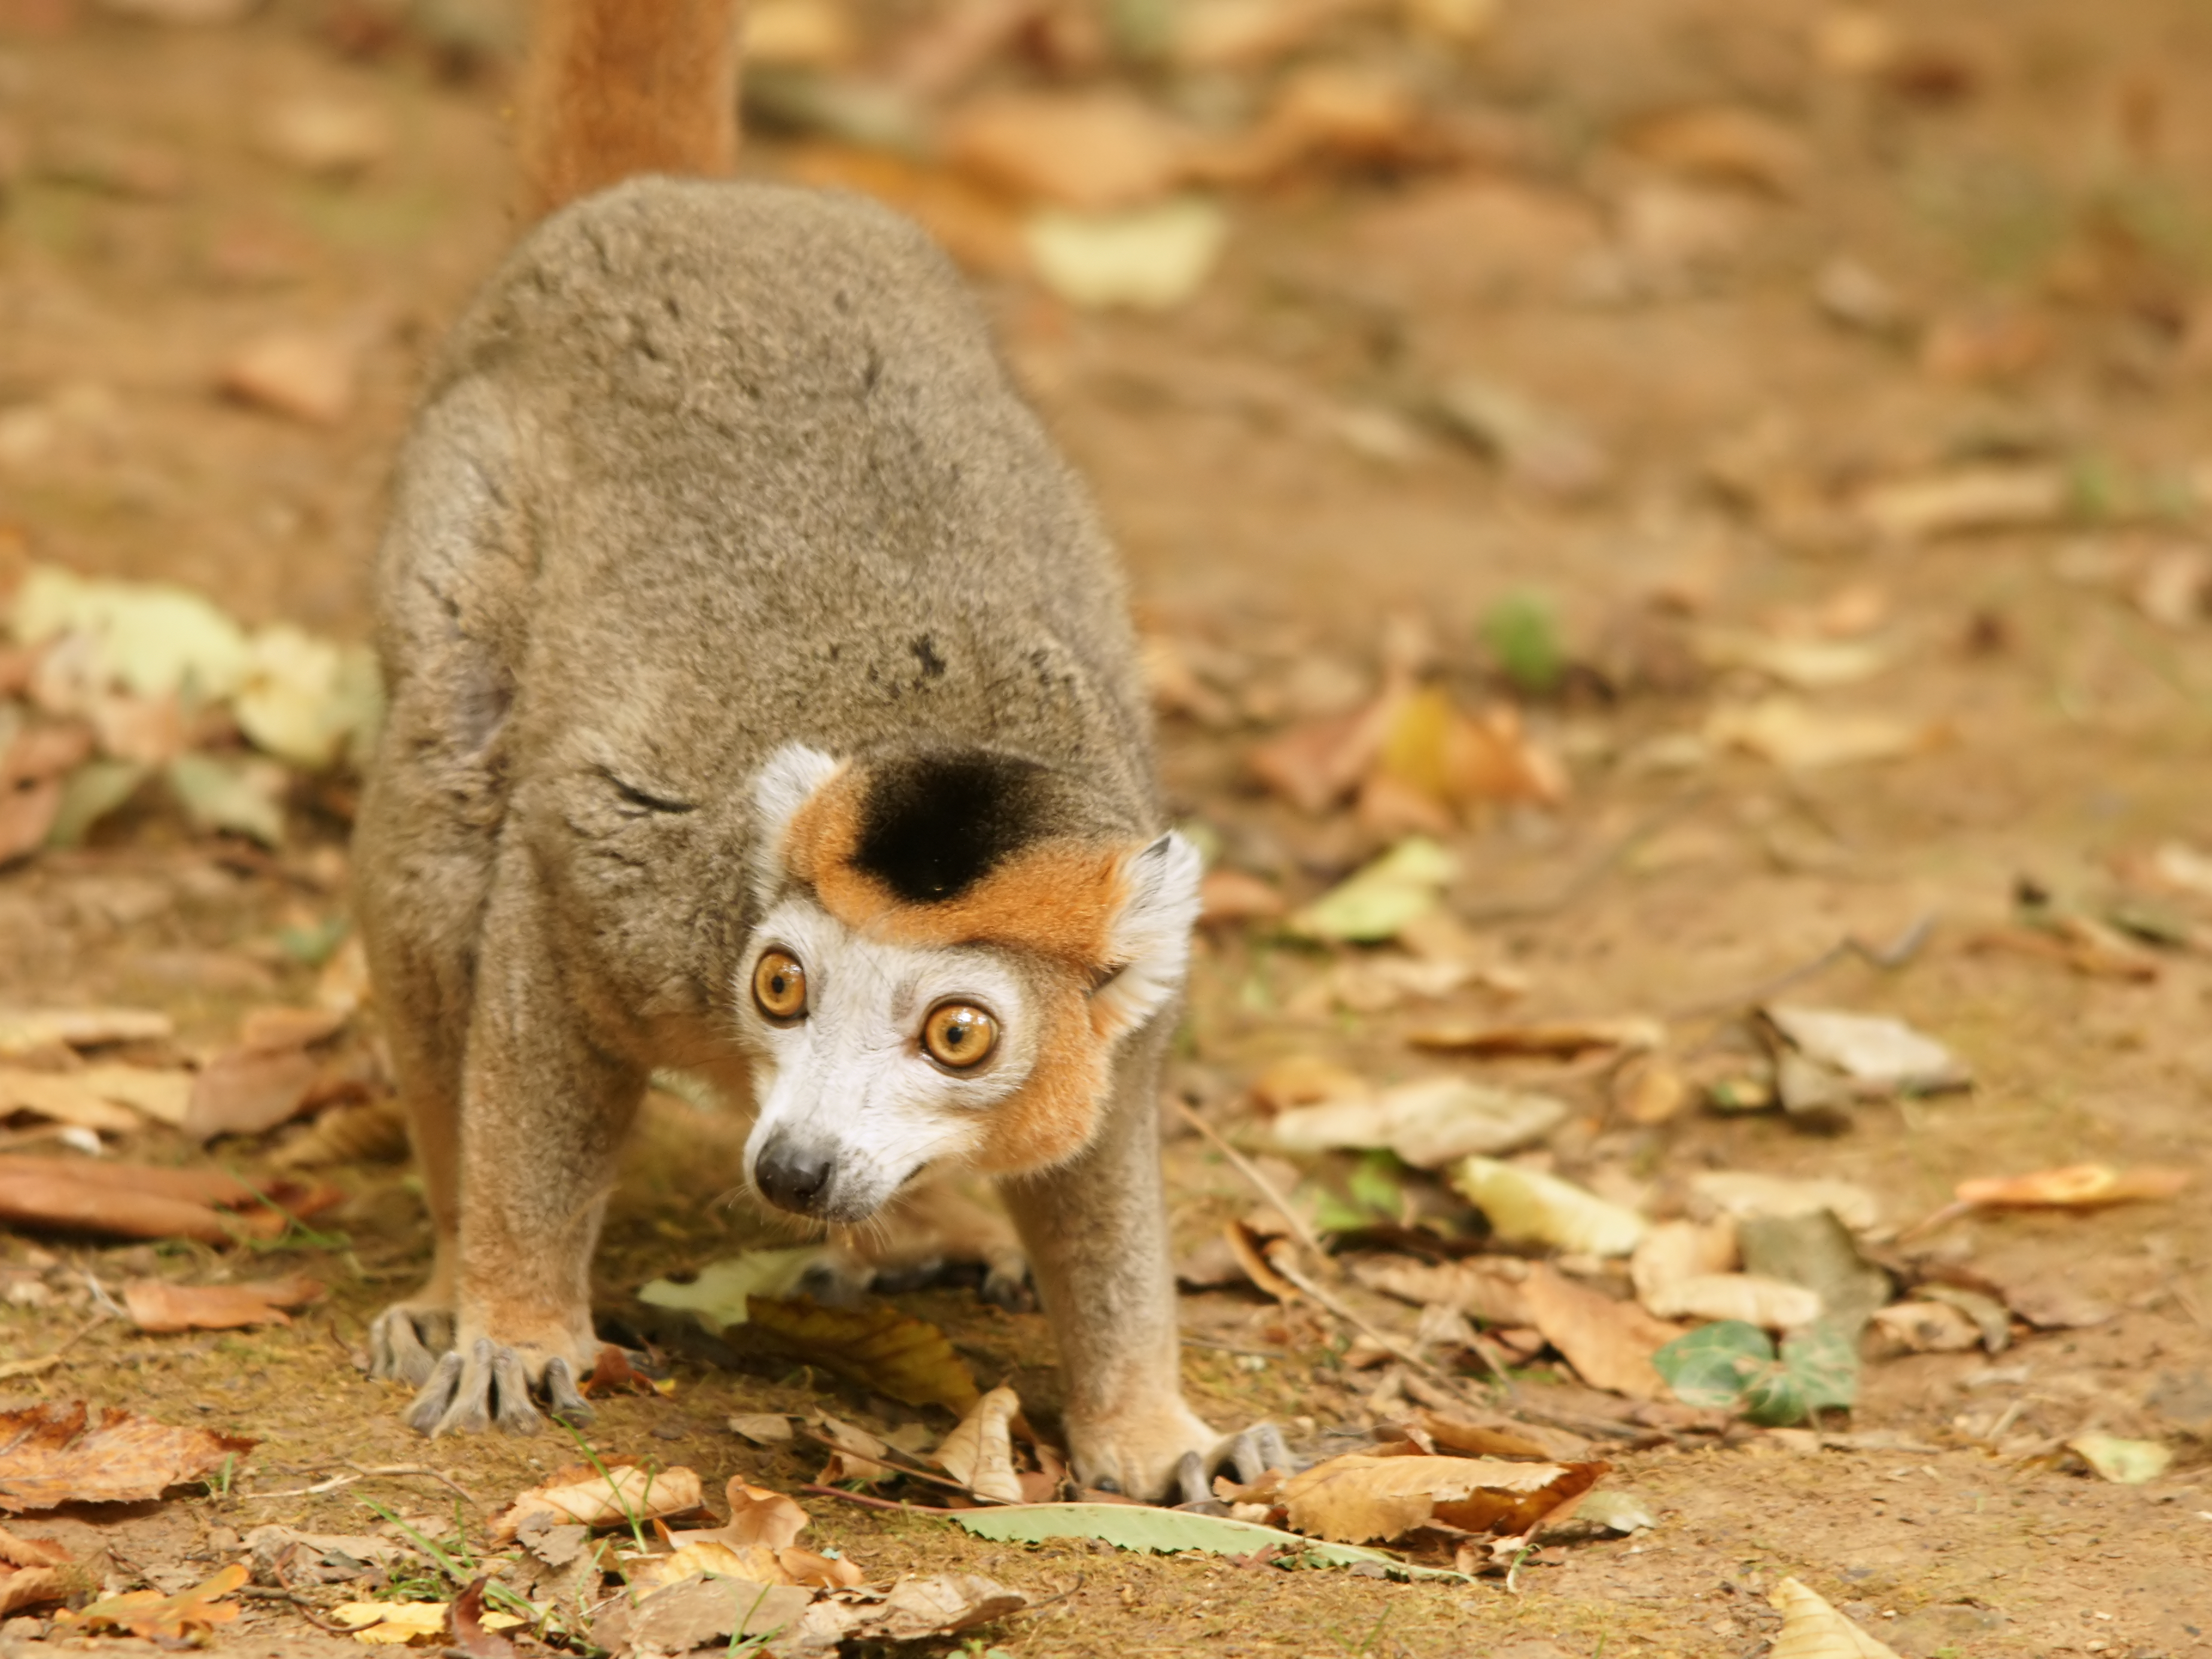 Crowned lemur - Wikipedia